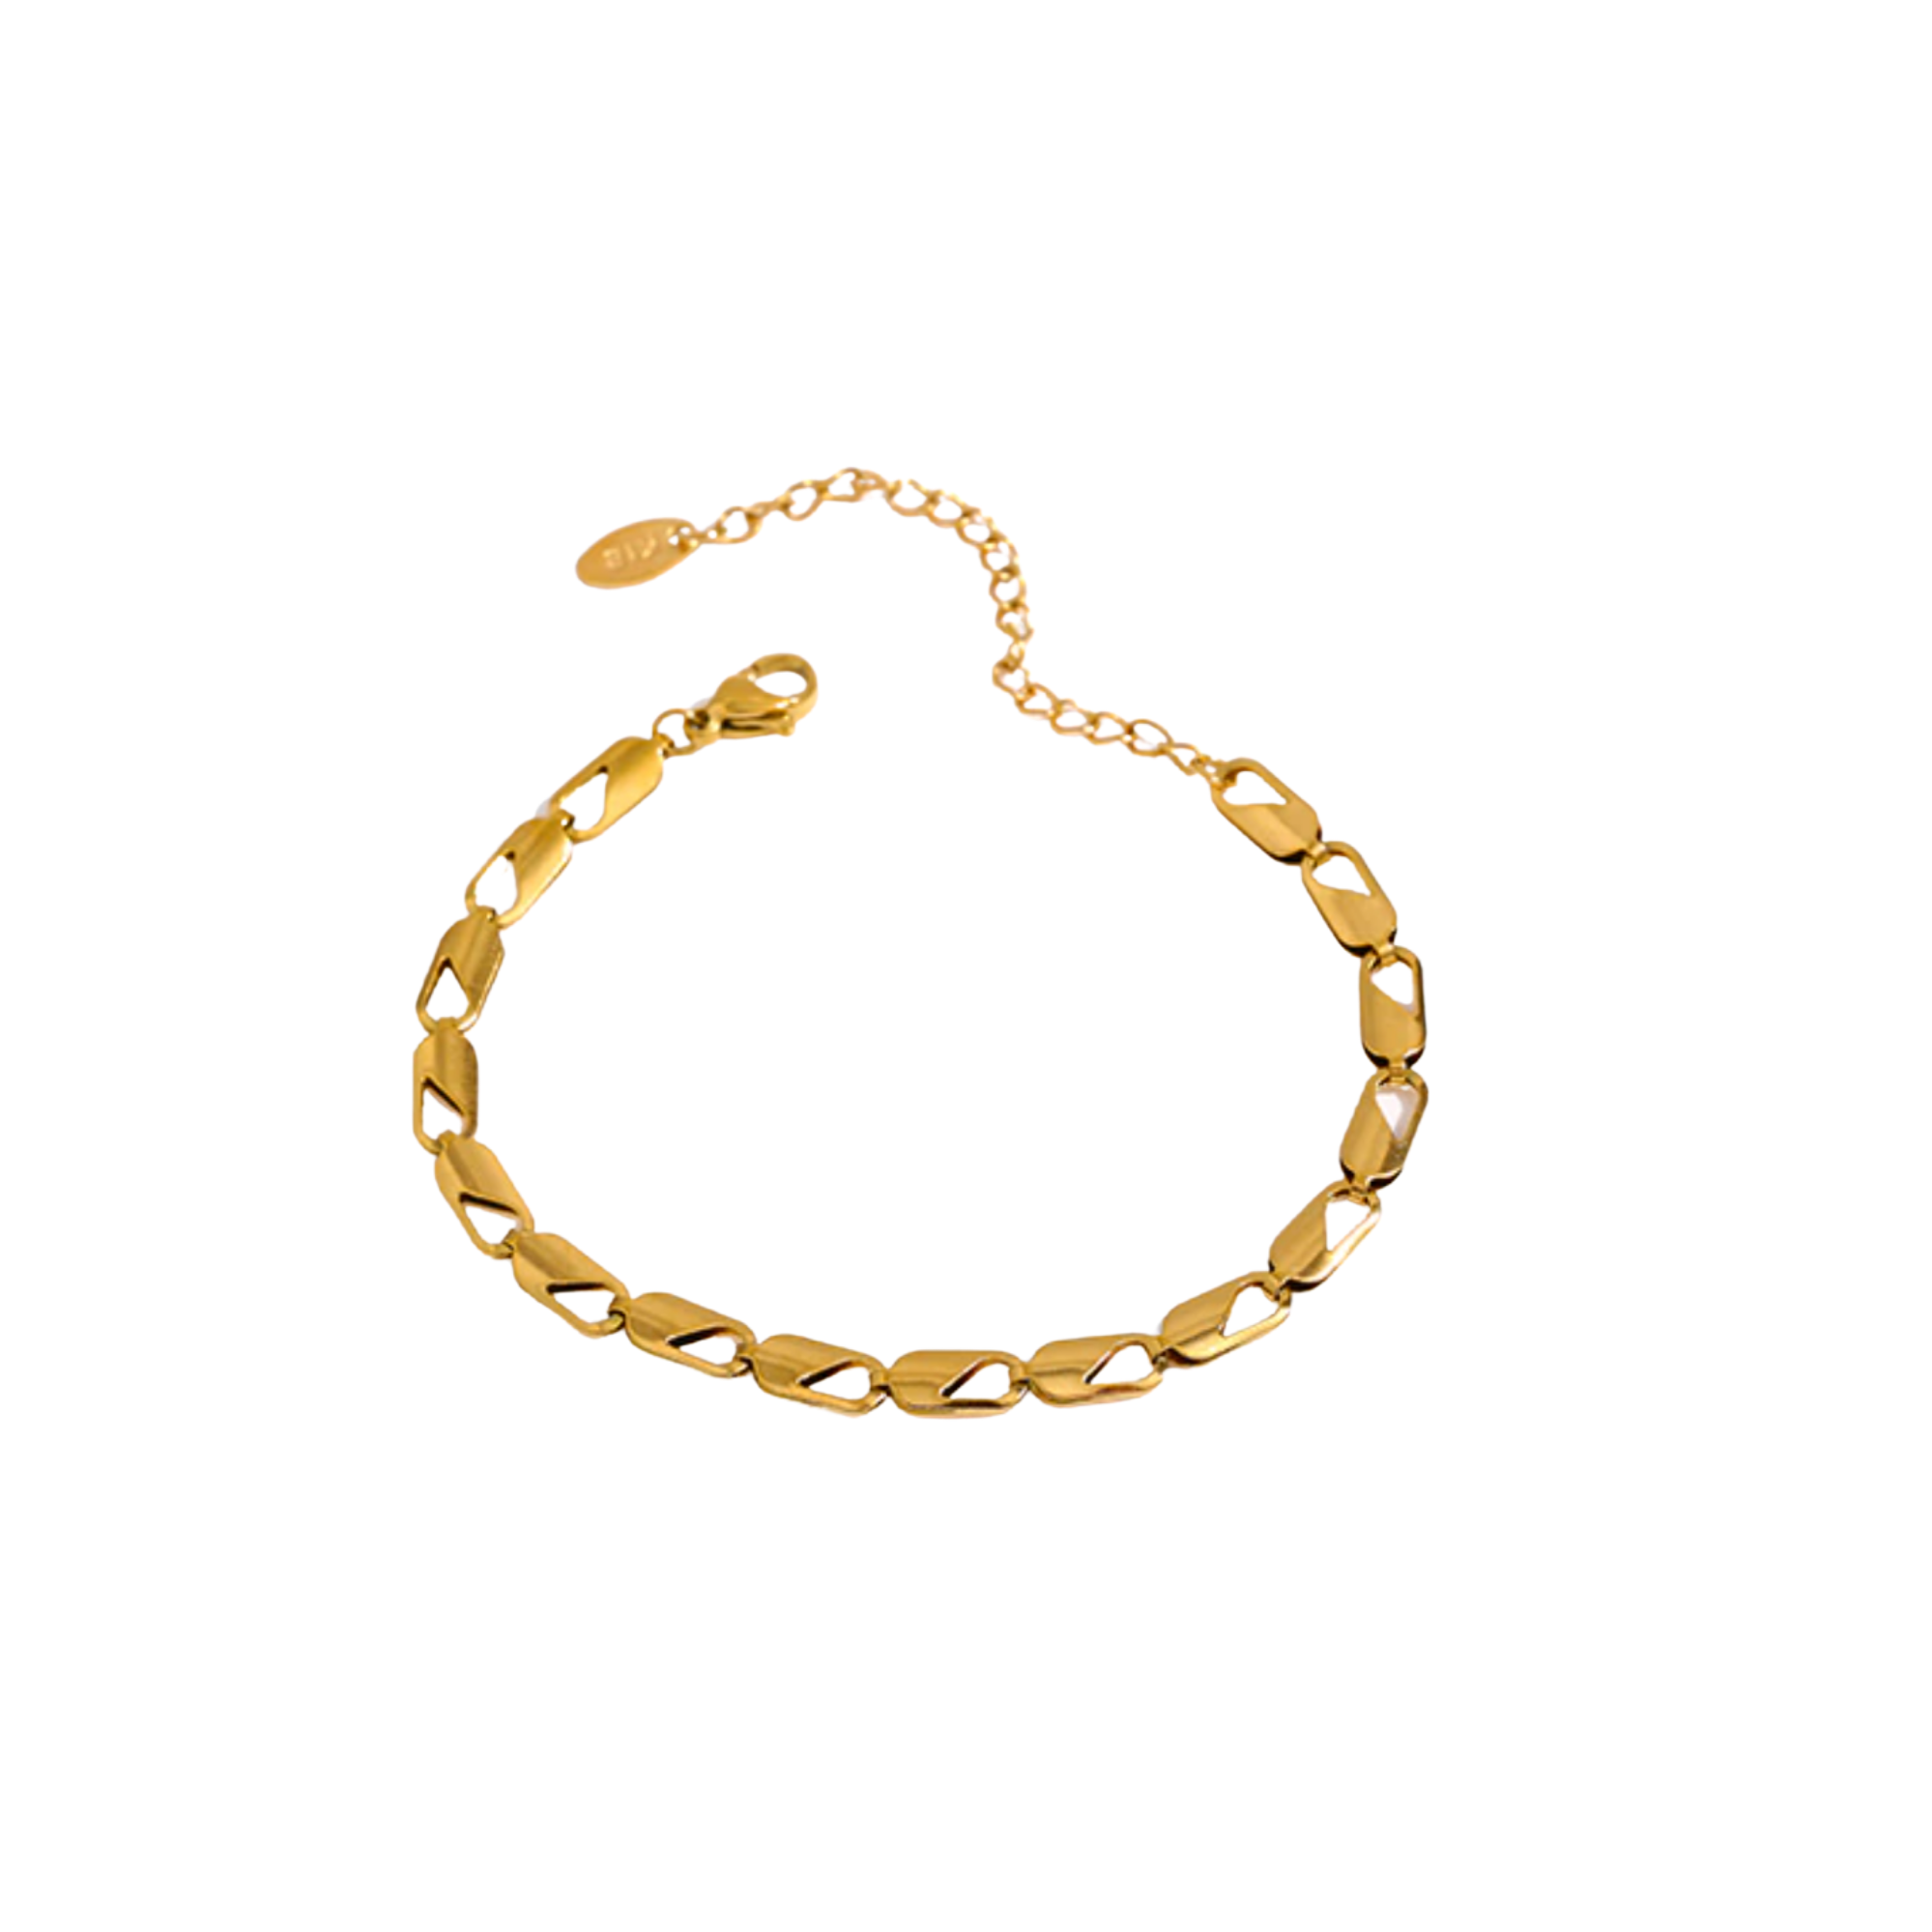 Buy Jacqueline B Kennedy Bracelet, Gold Plated, Green Enamel Wide Links,  1990s Vintage Jewelry Online in India - Etsy